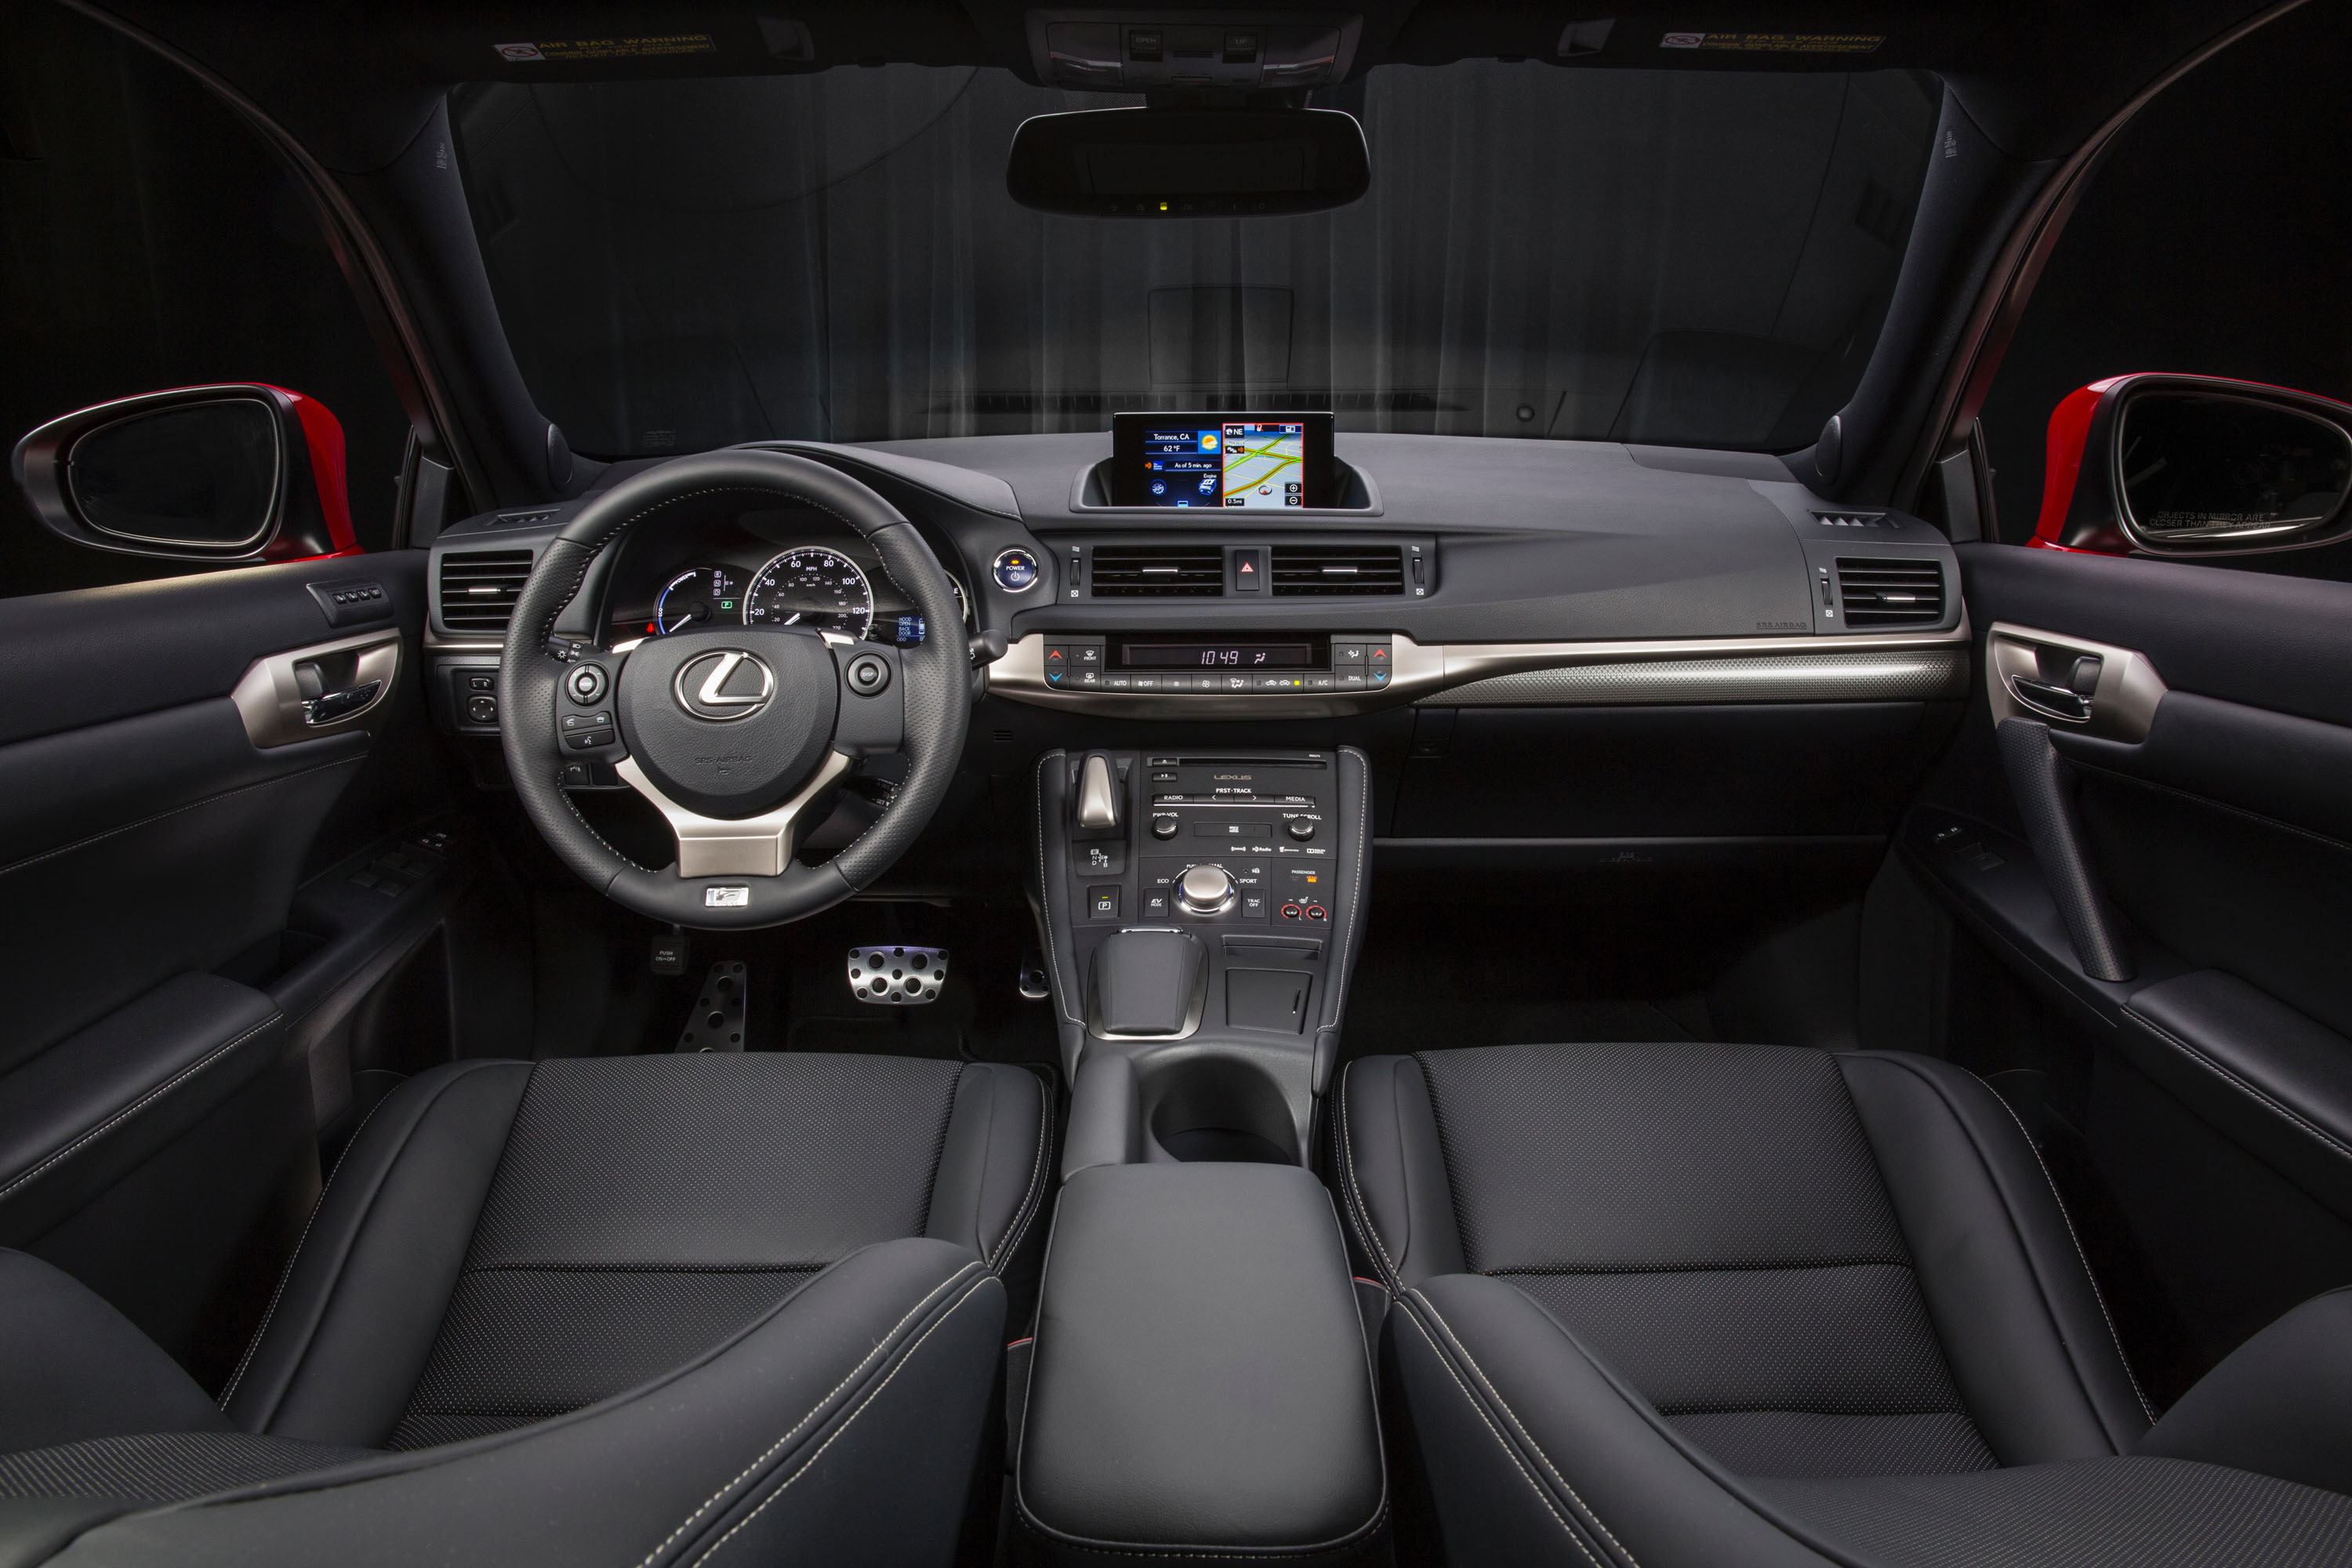 2016 Lexus CT 200h F SPORT 008 - Lexus USA Newsroom